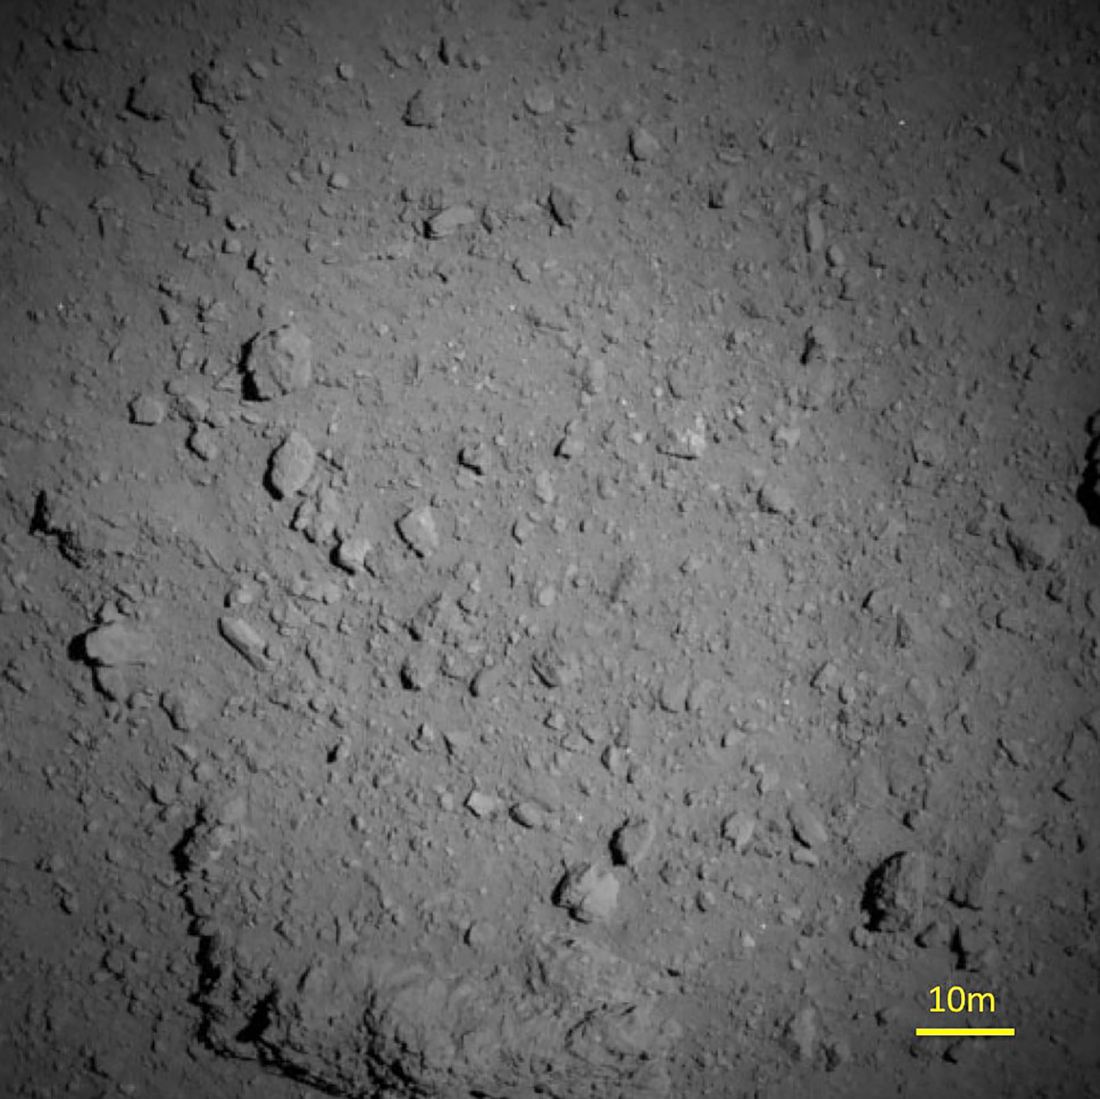 3.2-Billion-Kilometer Travel: Japanese Explorer Hayabusa2 Reaches Asteroid Ryugu